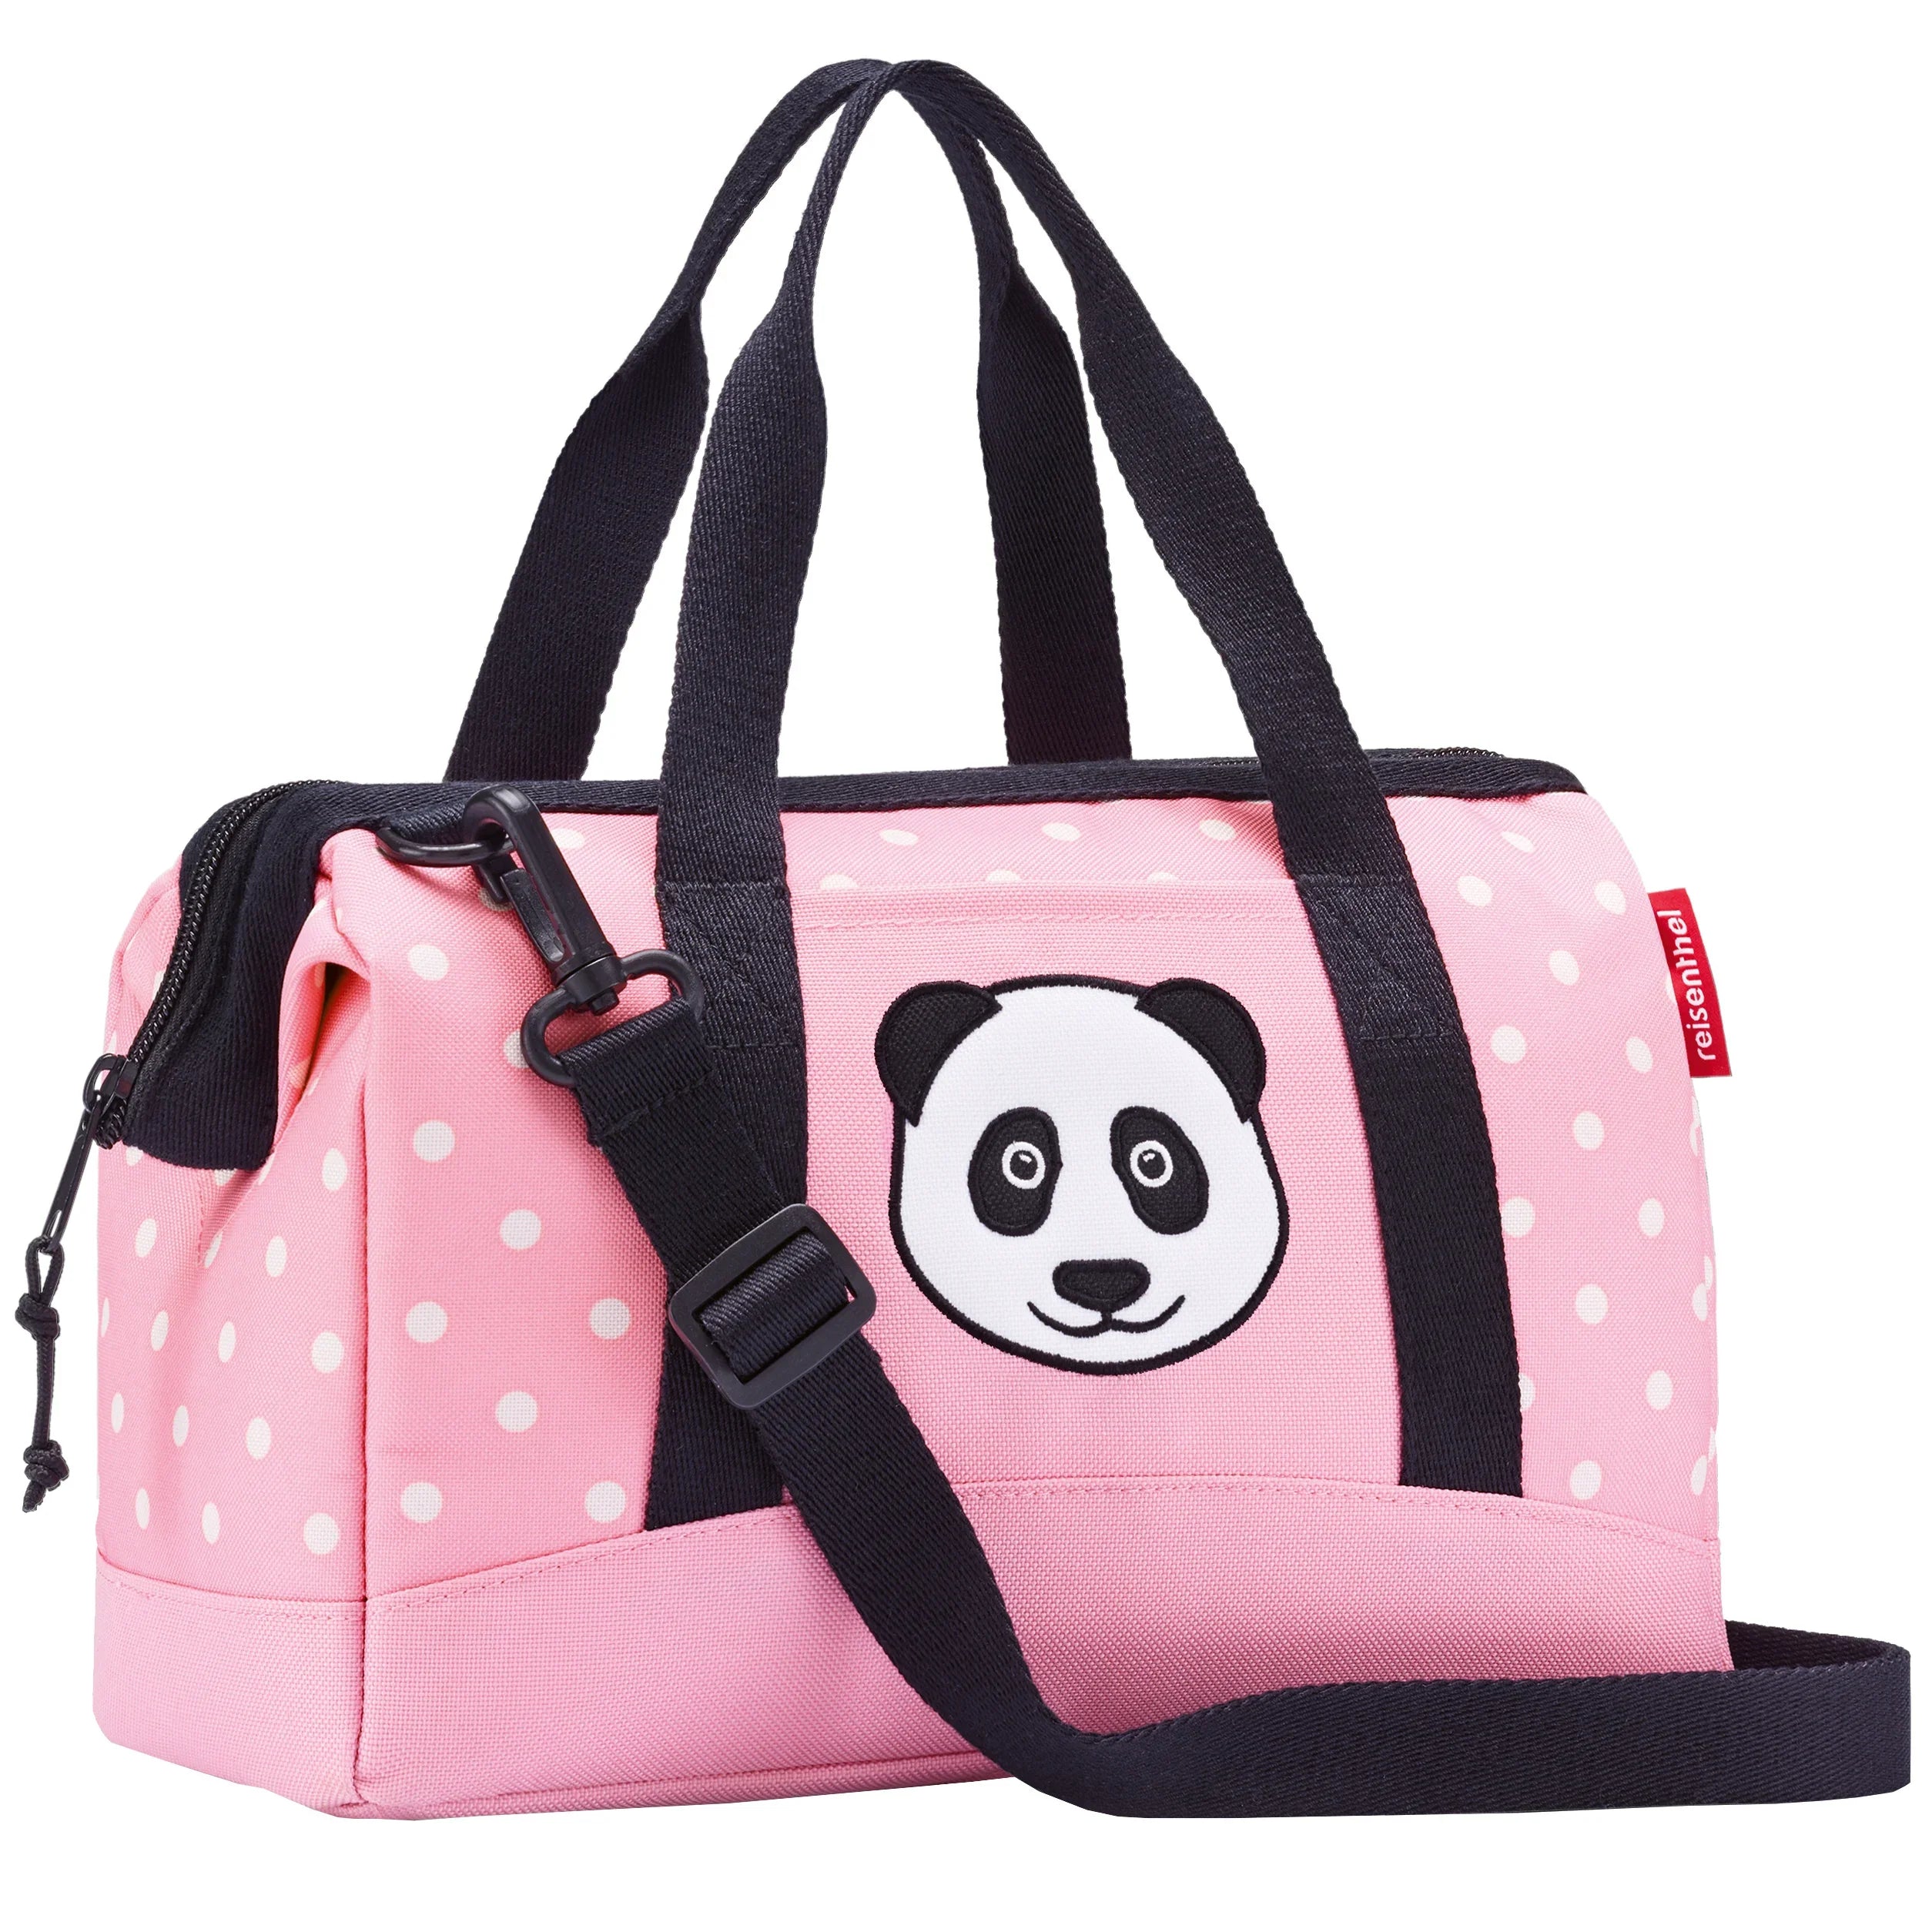 Reisenthel Kids Allrounder sac de voyage XS 27 cm - panda à pois rose